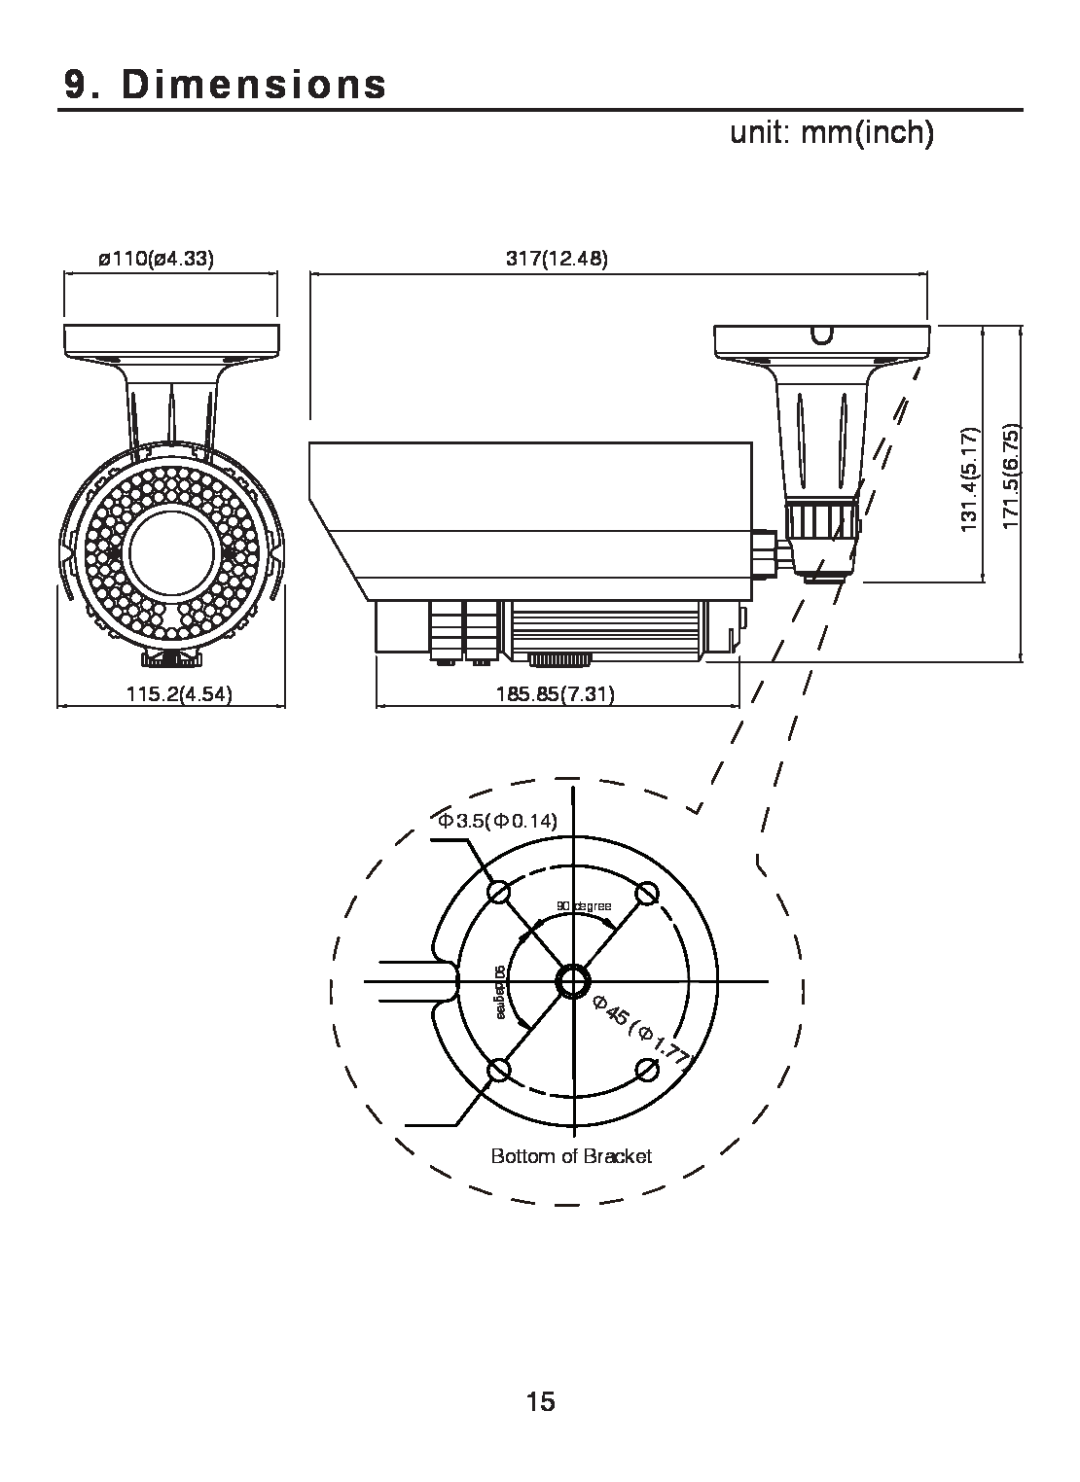 EverFocus EZ-PLATECAM2 operation manual Dimensions, unit mminch, Ф3.5Ф0.14, degree 